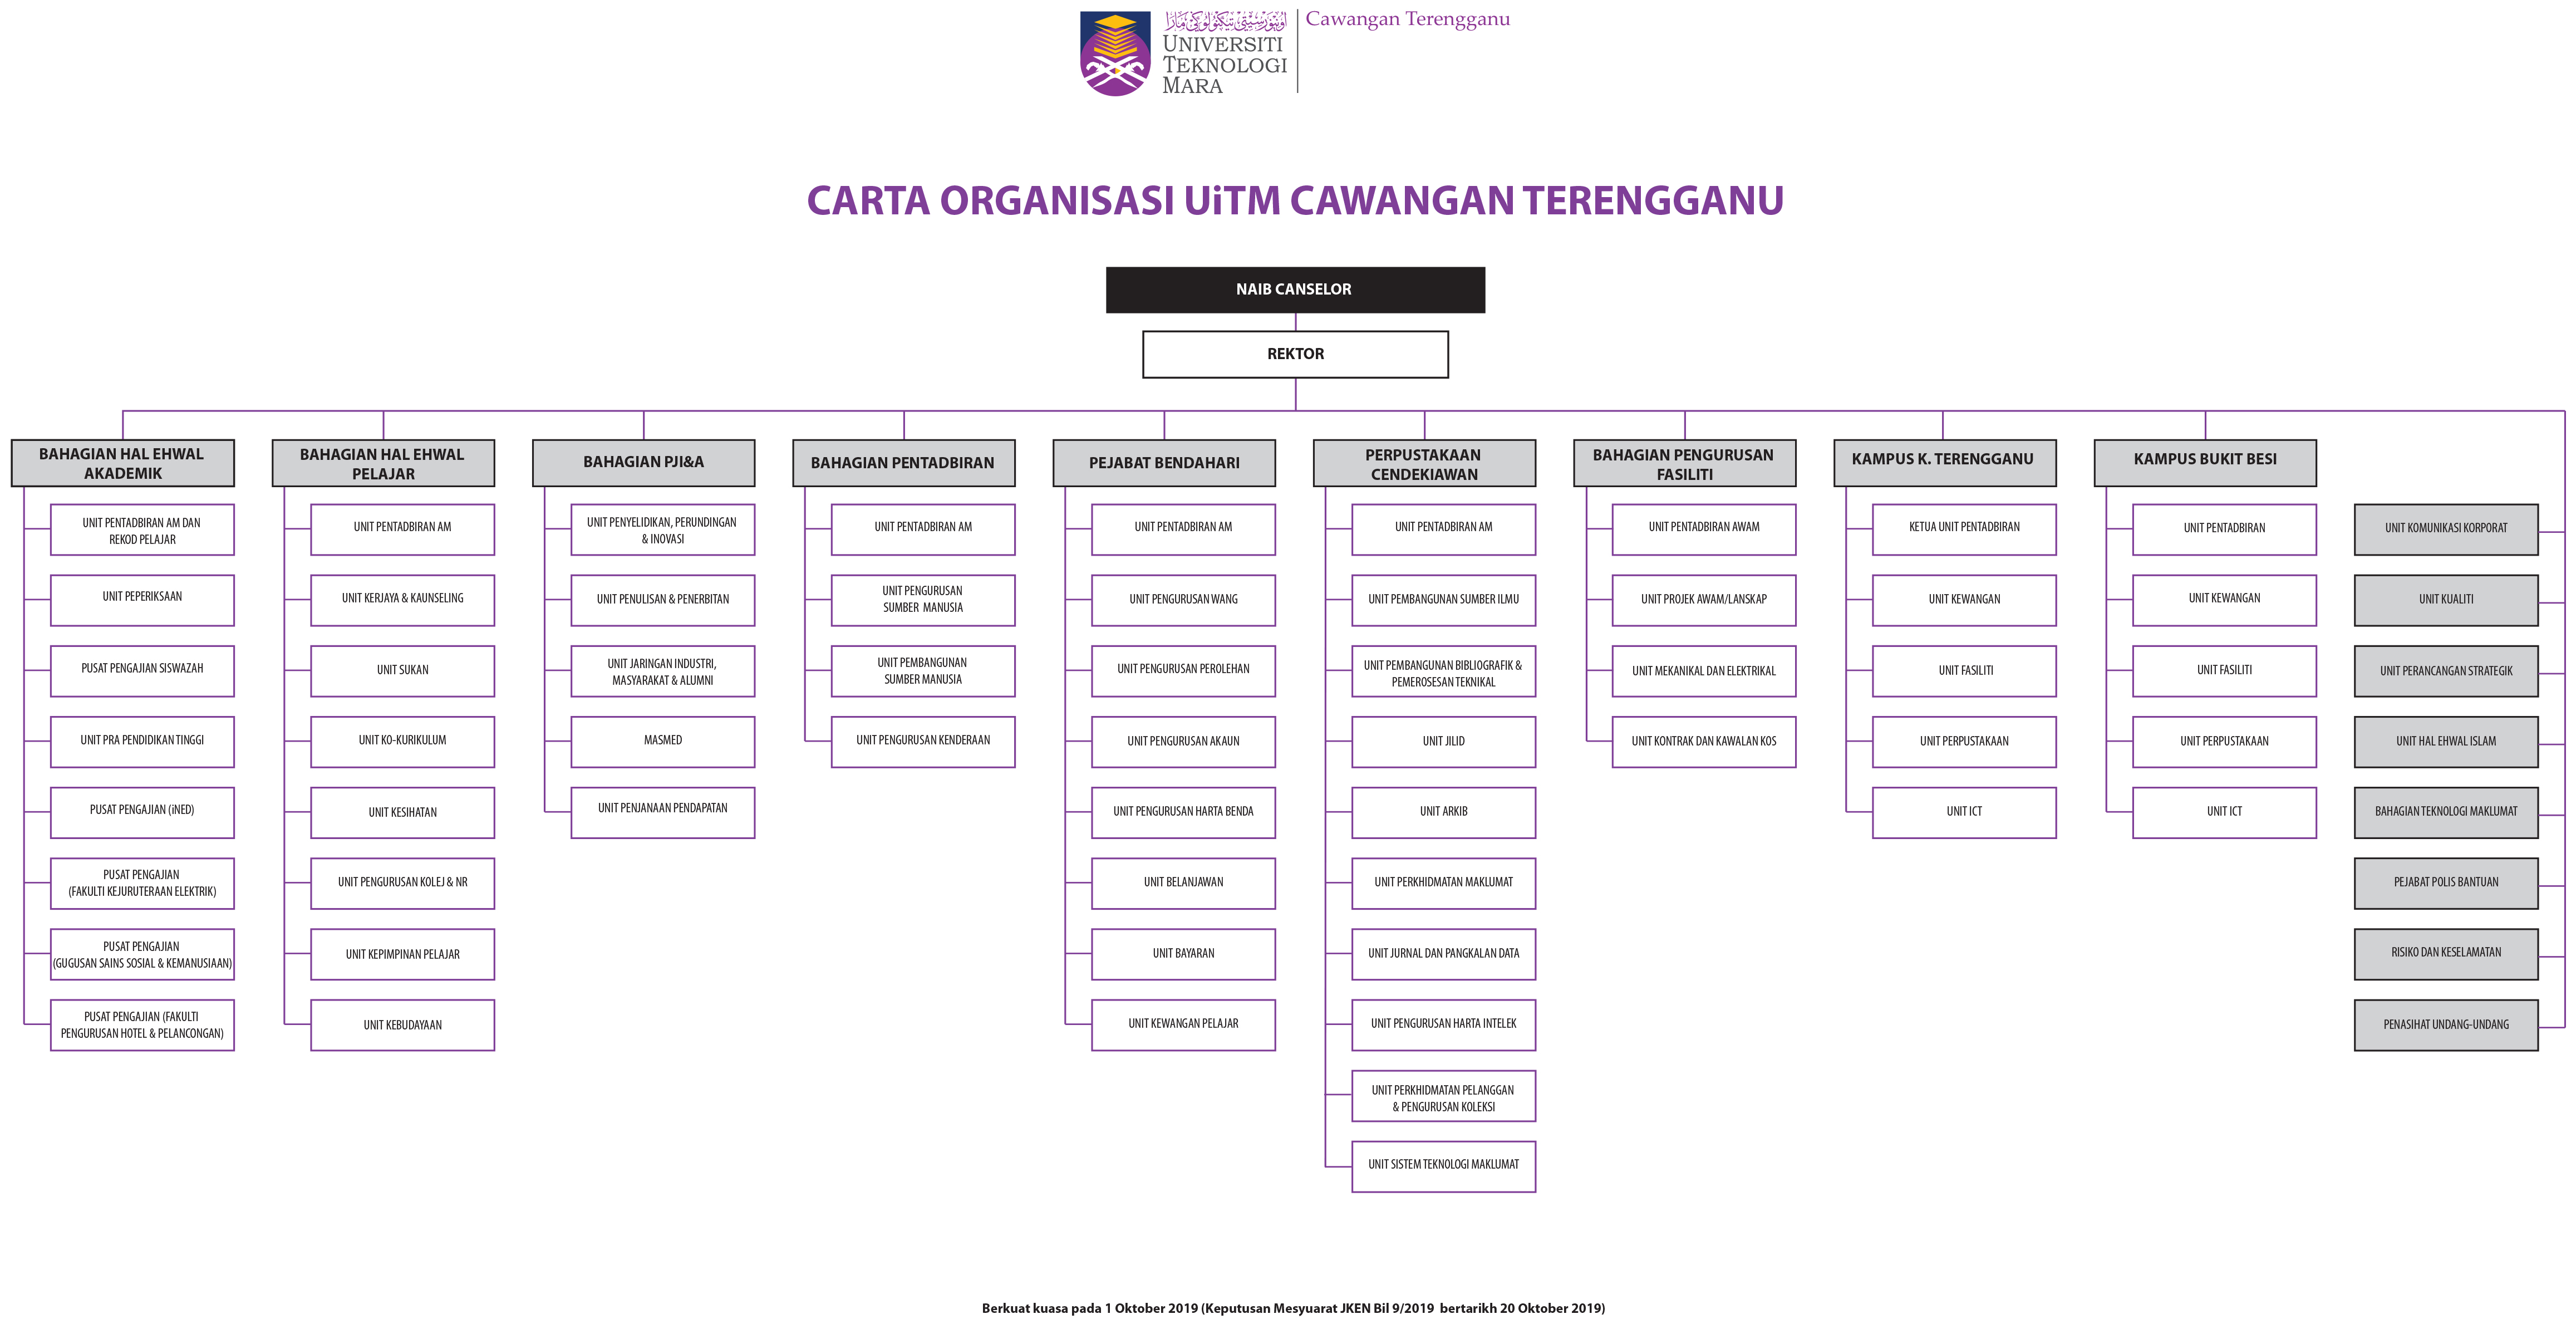 Organisation Chart